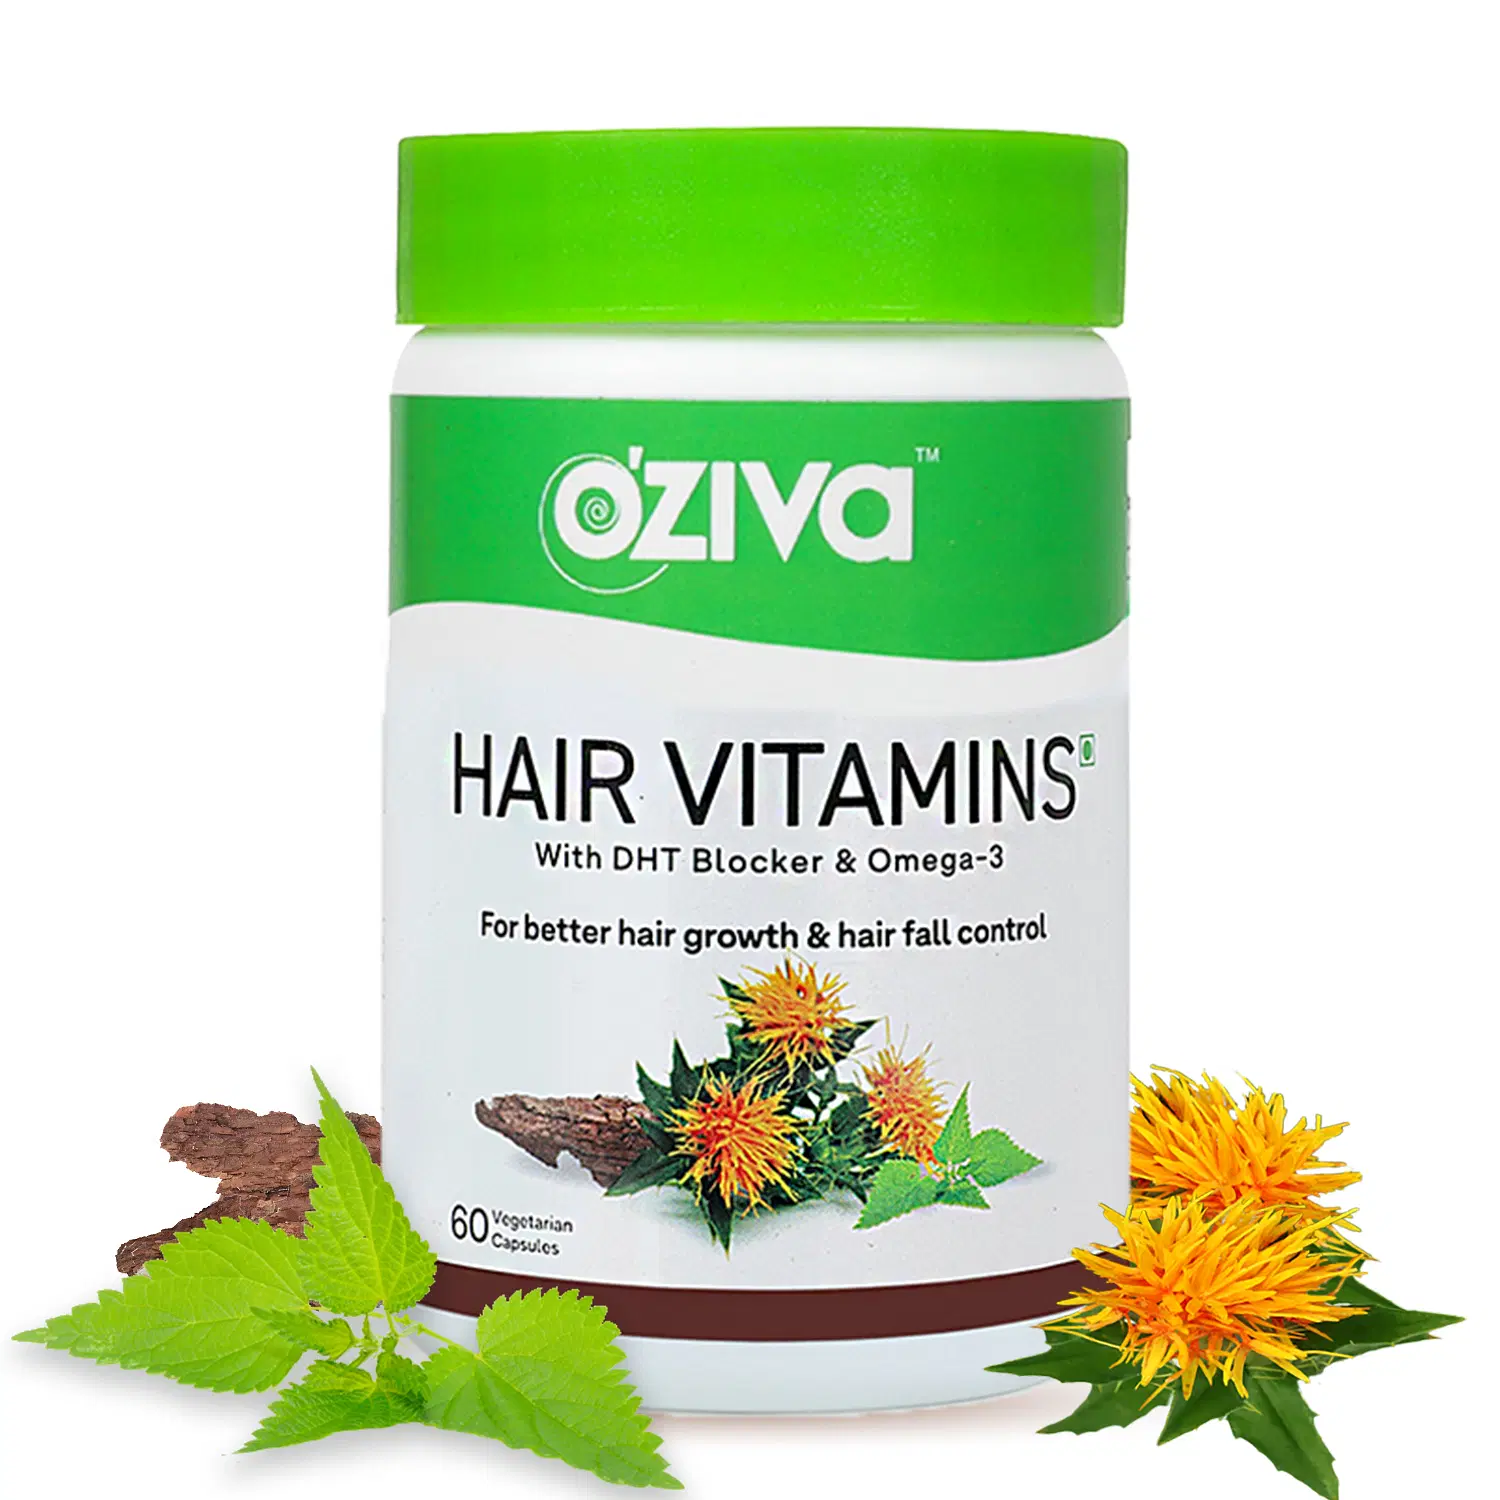 OZiva Hair Vitamins (With DHT Blocker, Omega 3, Iron, & Biotin) For Better Hair  Growth & Nourishment, Hairfall Control, Certified Clean & Vegan, 60 Capsules